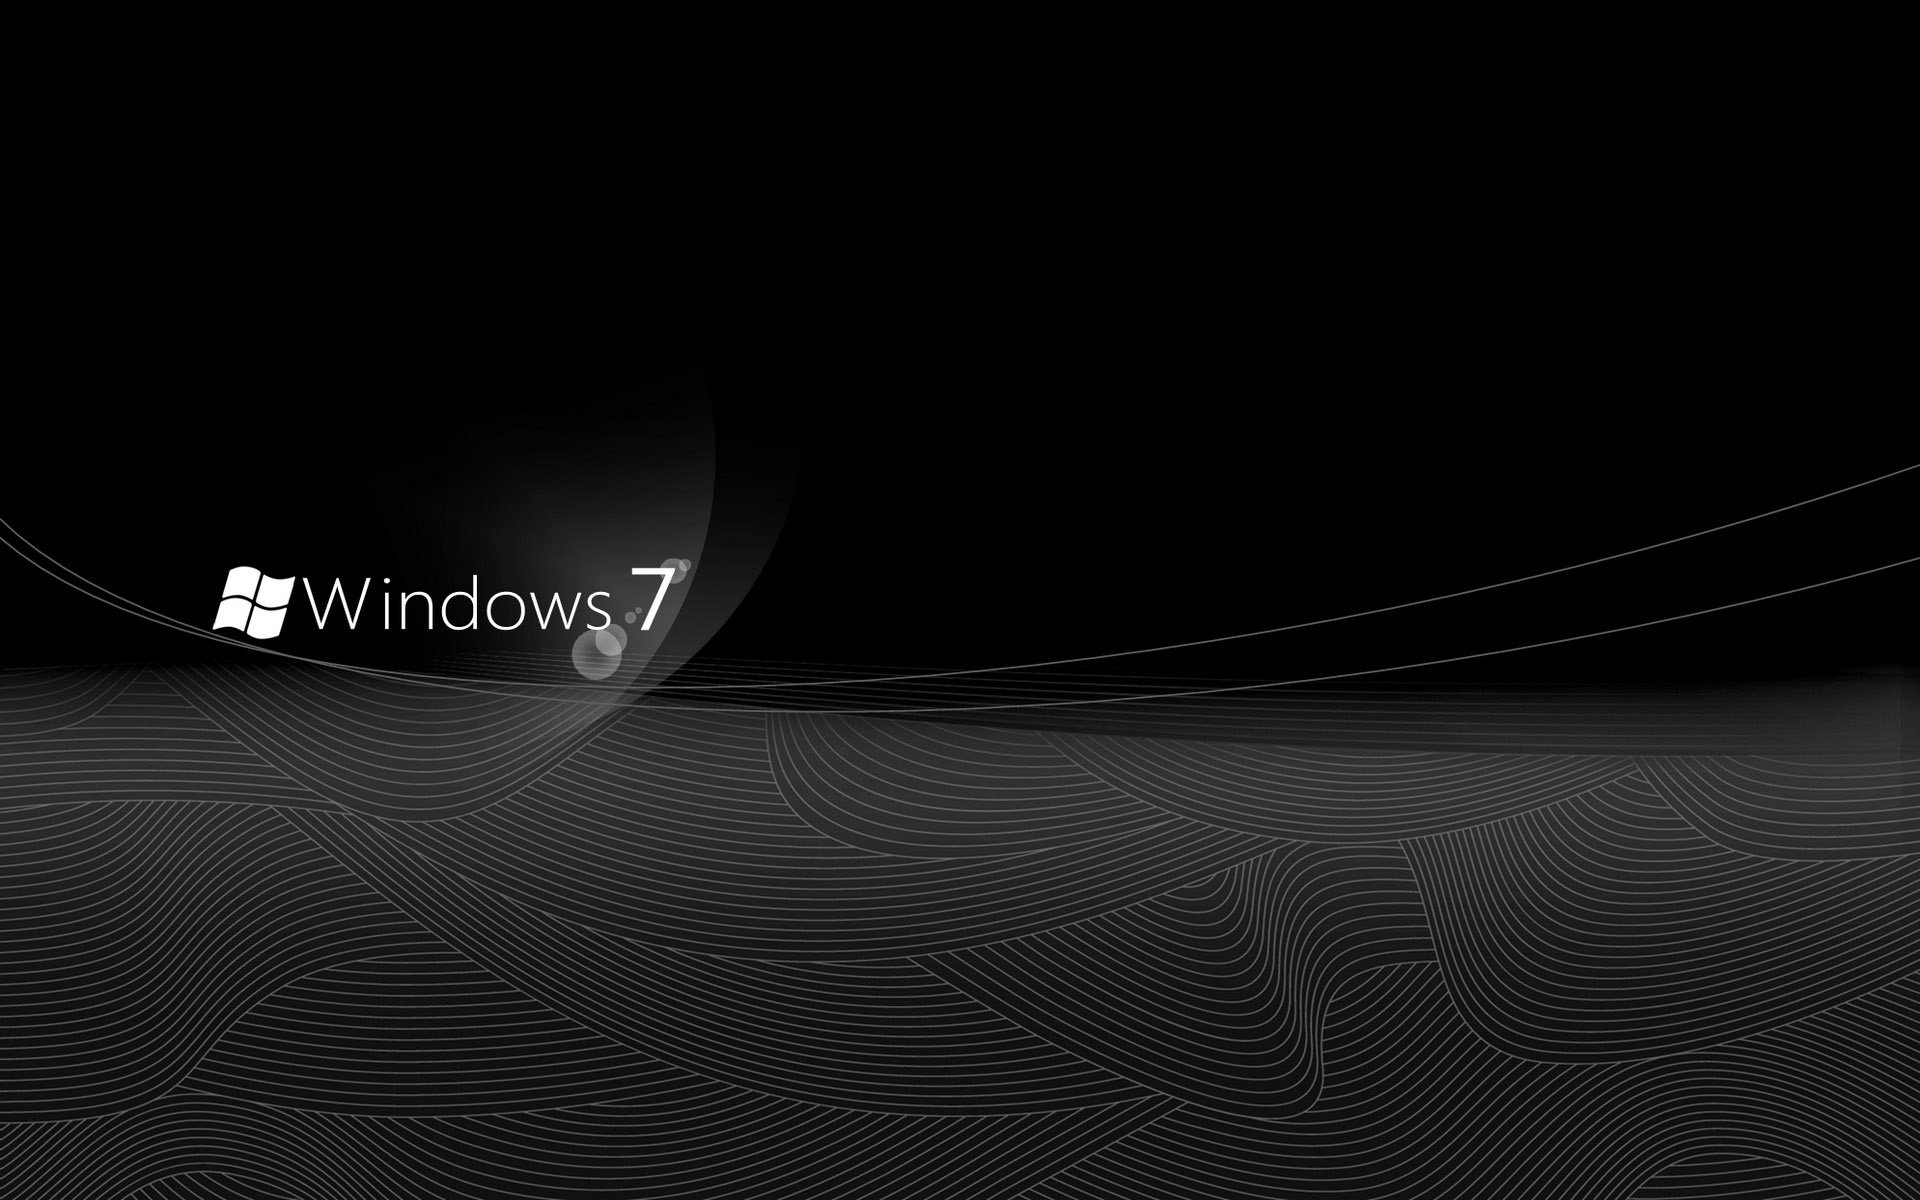 Эмблема windows 7 на черно-белом фоне